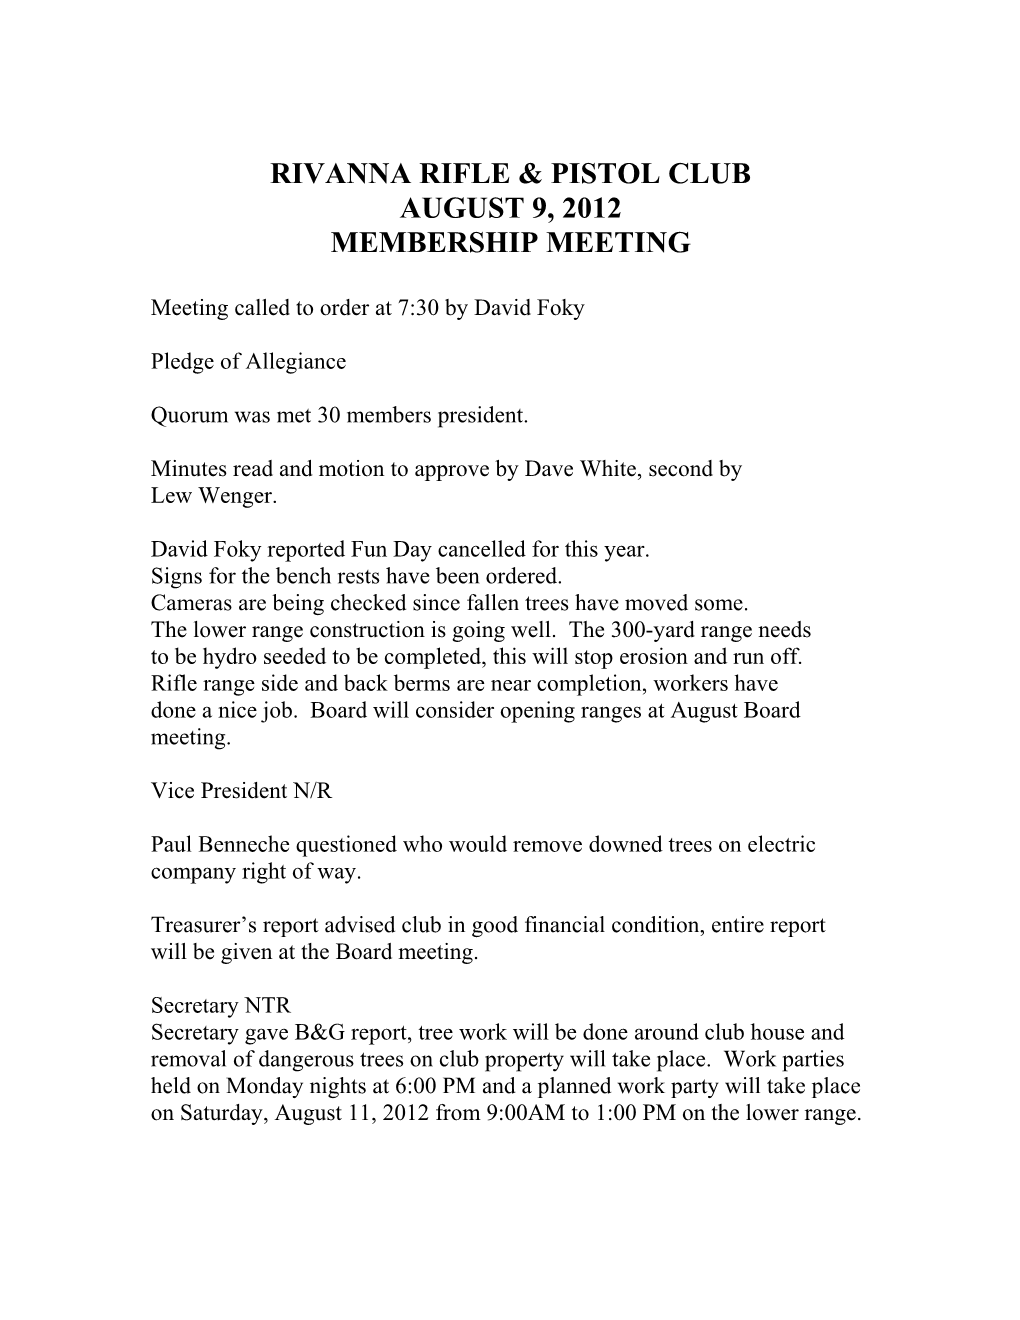 Rivanna Rifle & Pistol Club